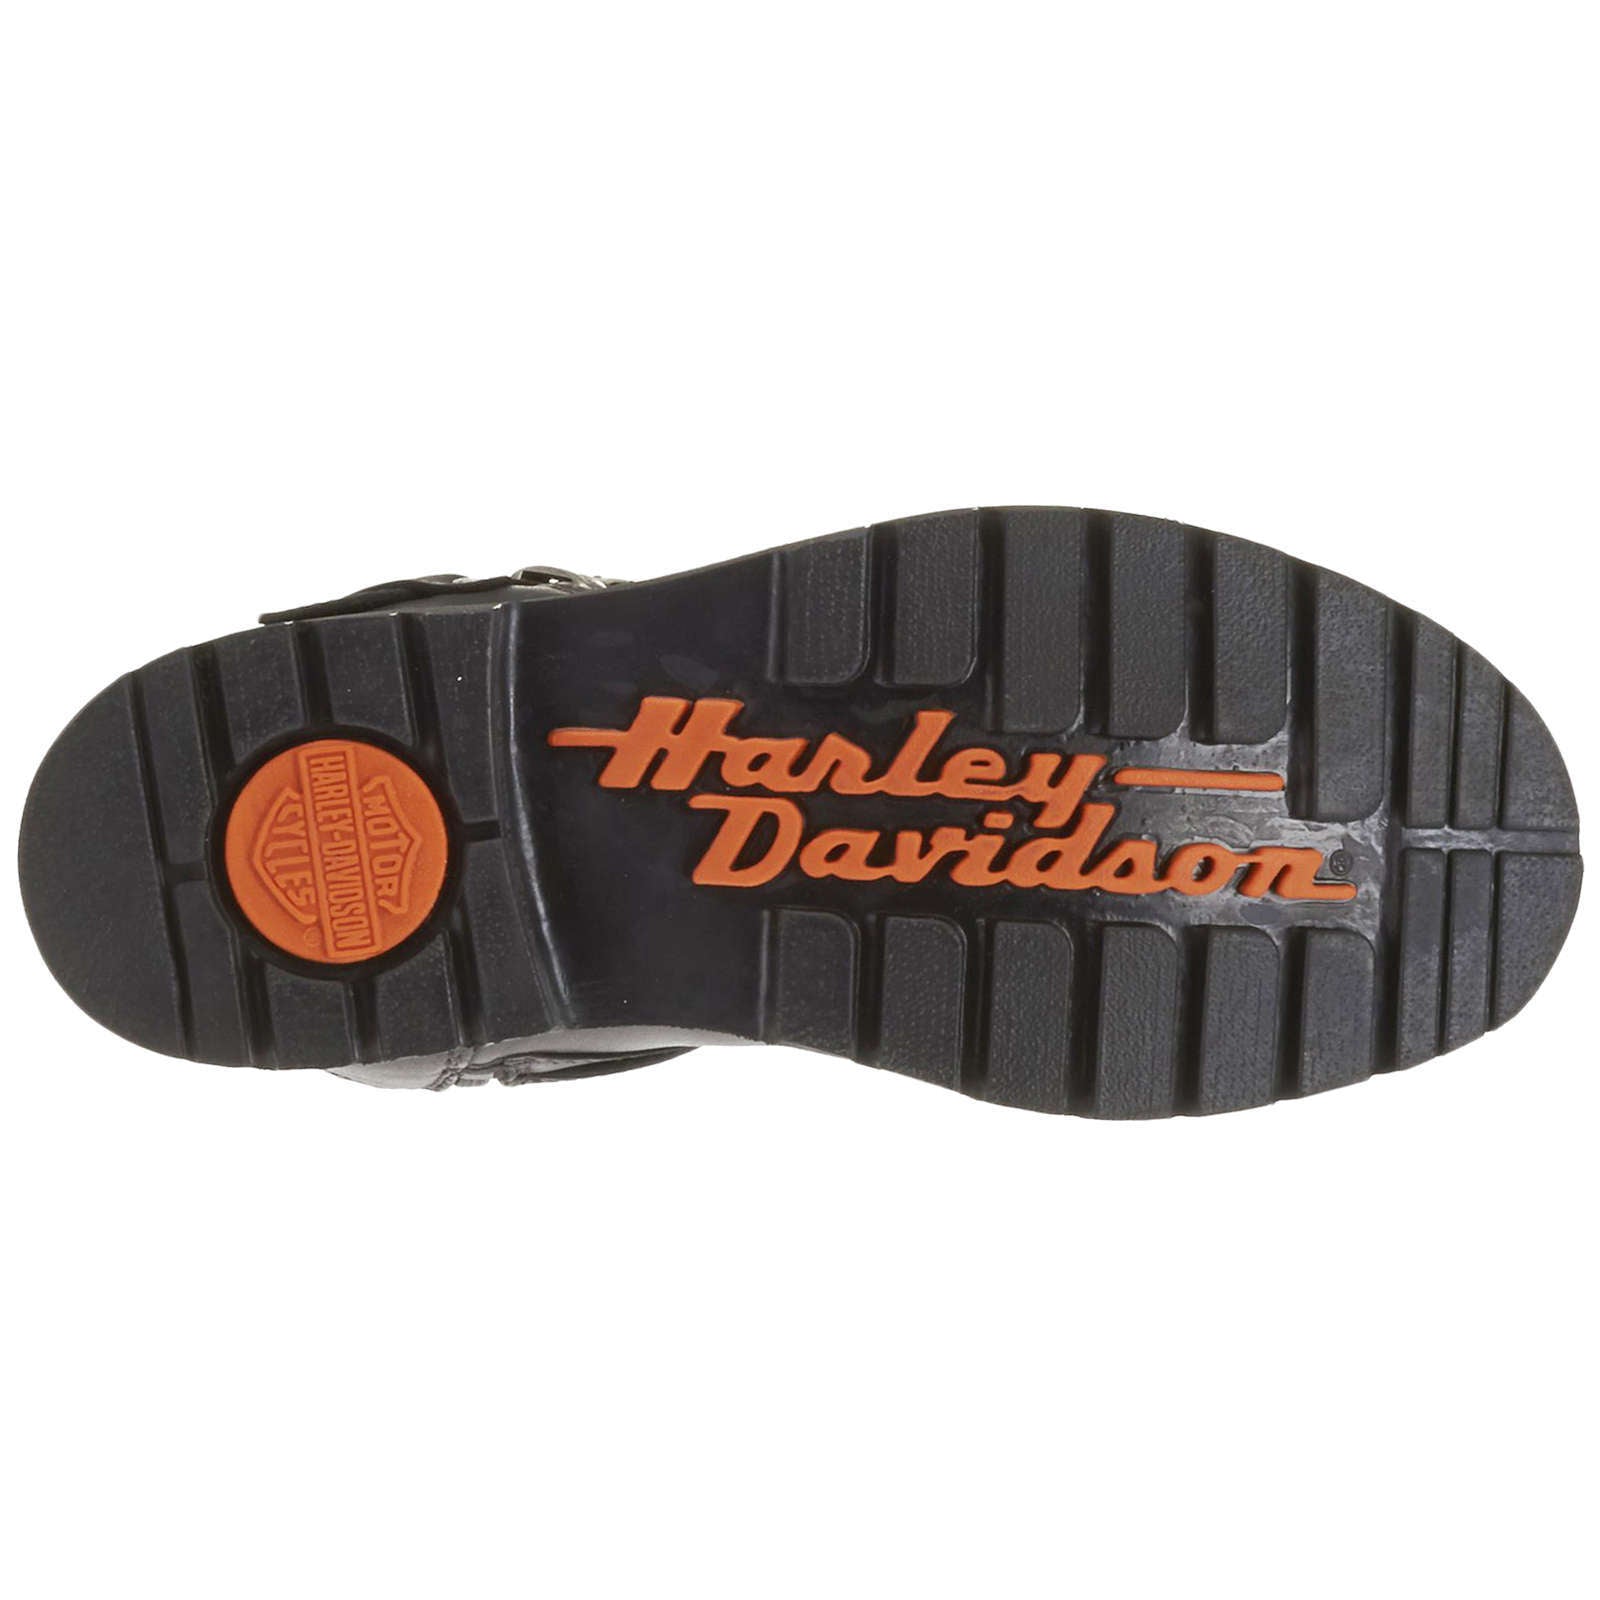 Harley Davidson Booker Full Grain Leather Men's Riding Boots#color_black